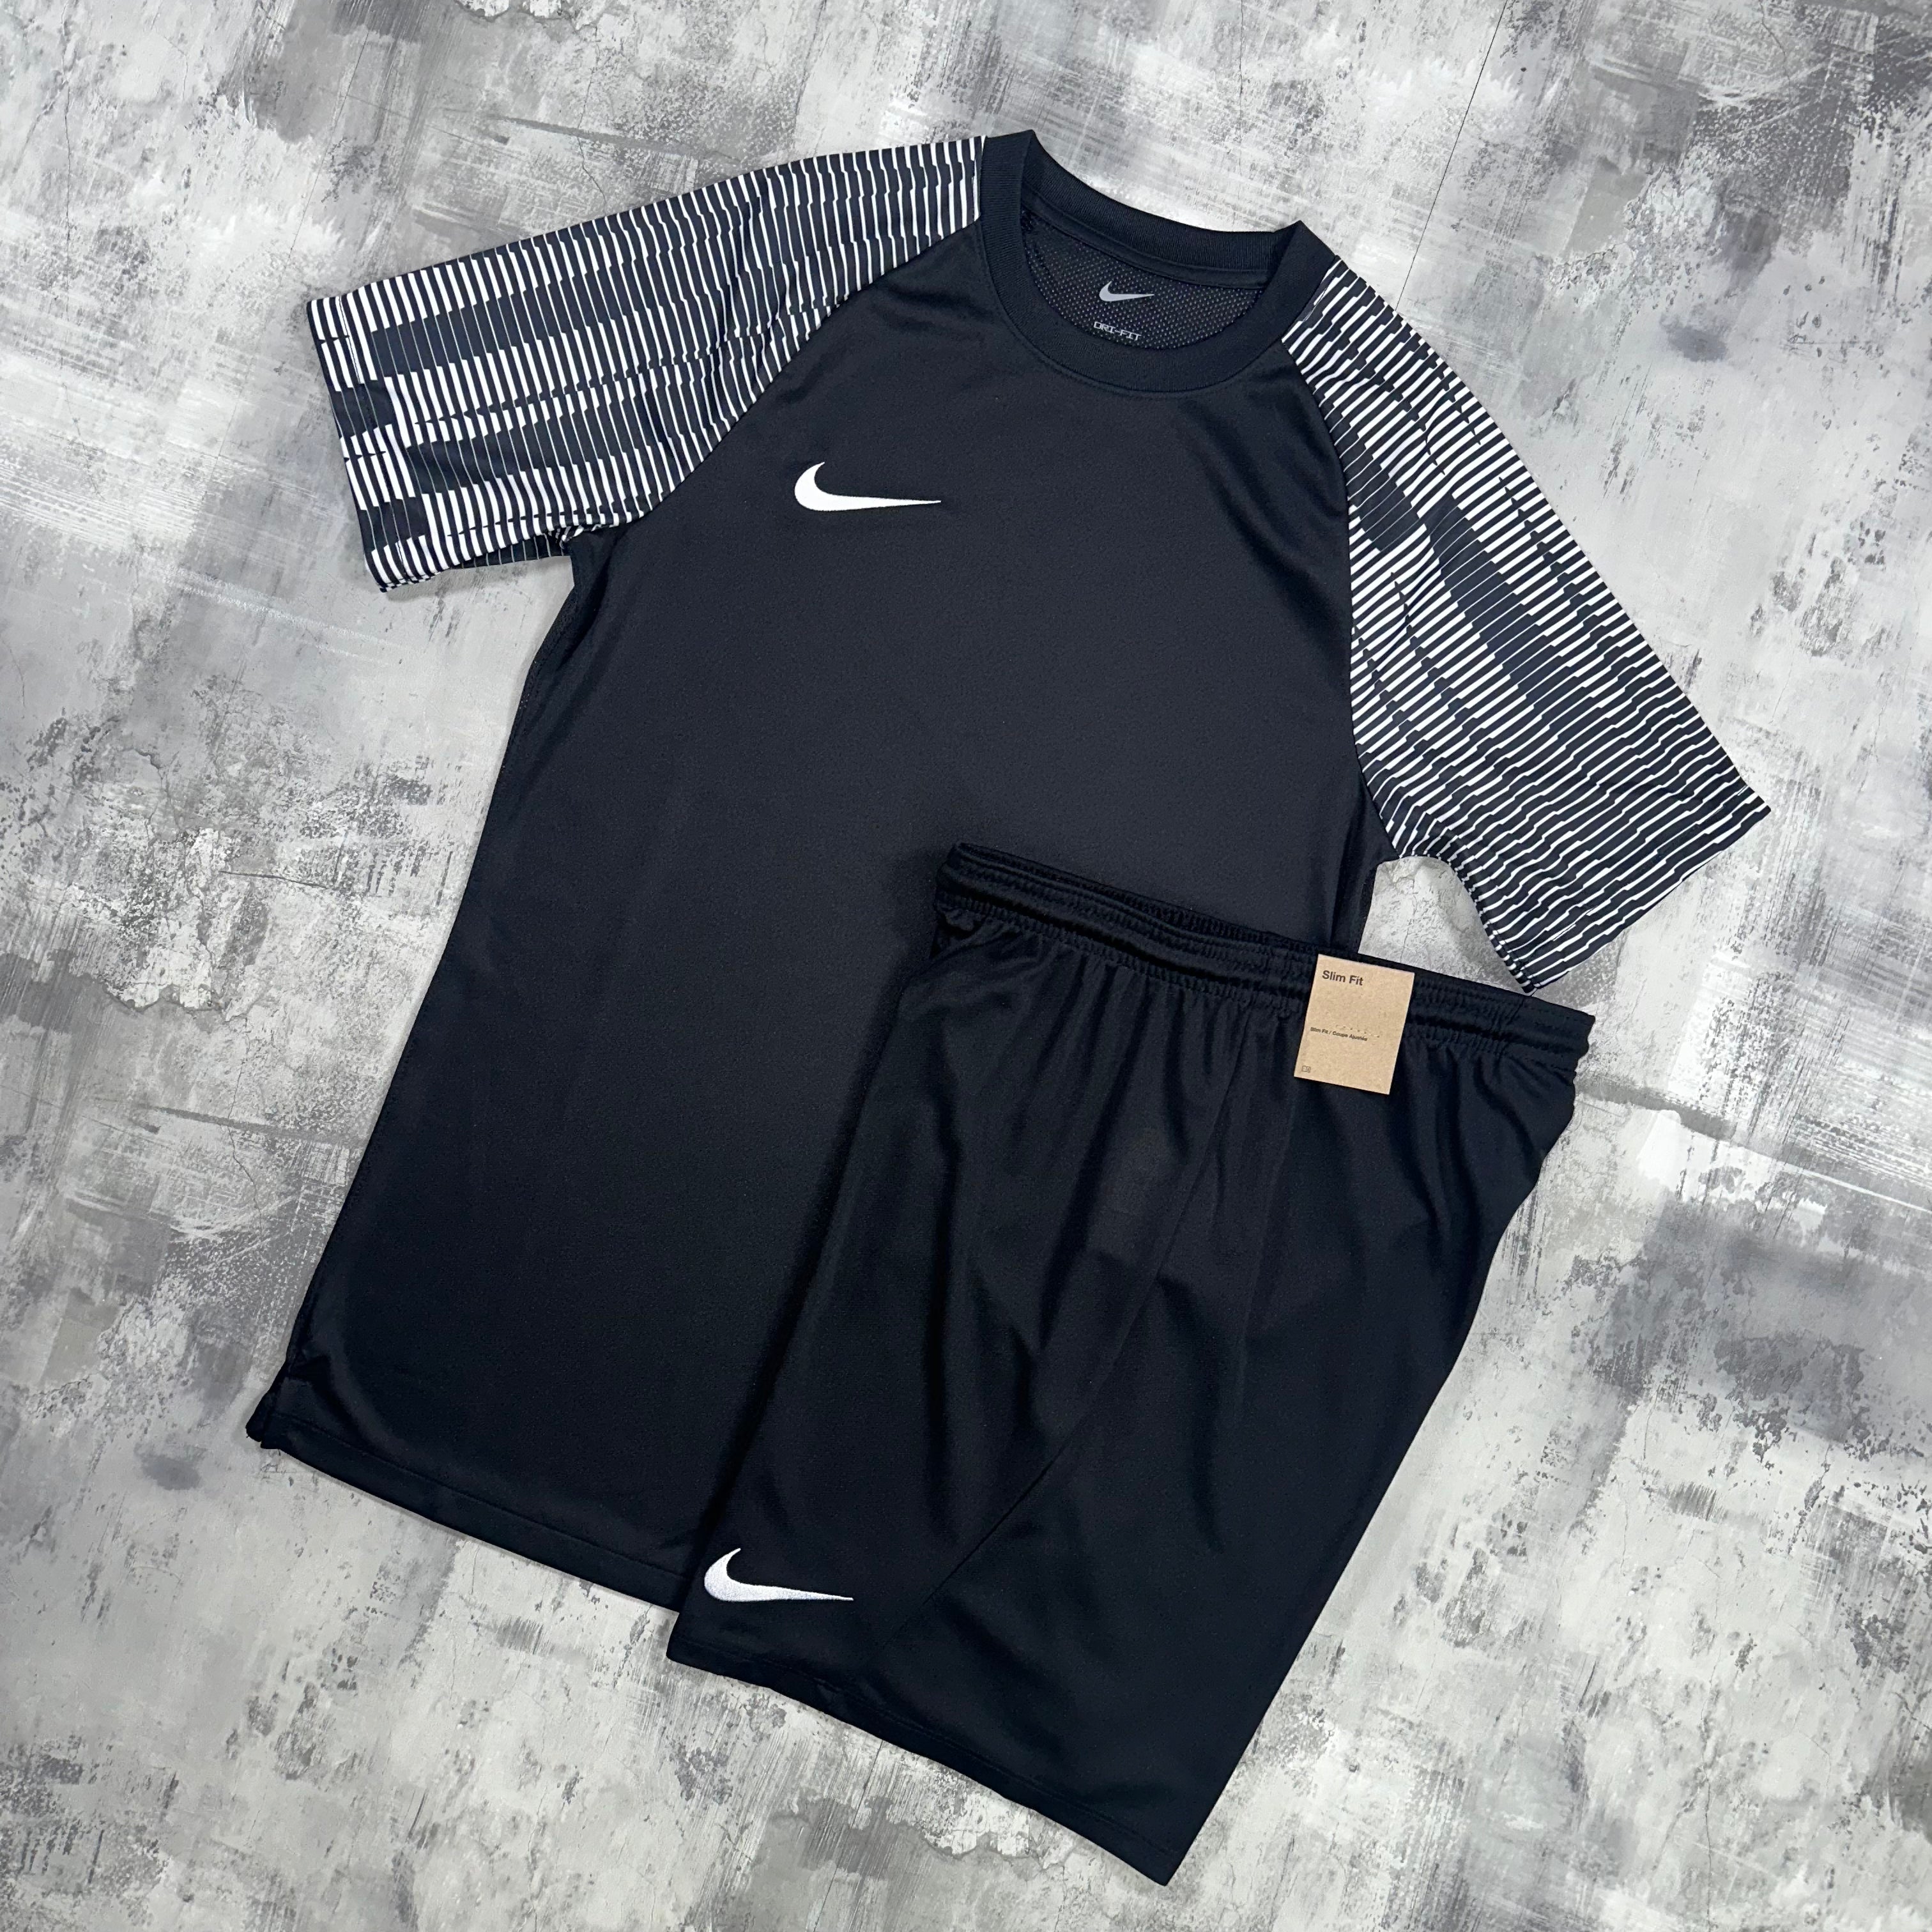 Nike Dri-Fit academy pro set Black - t-shirt and shorts